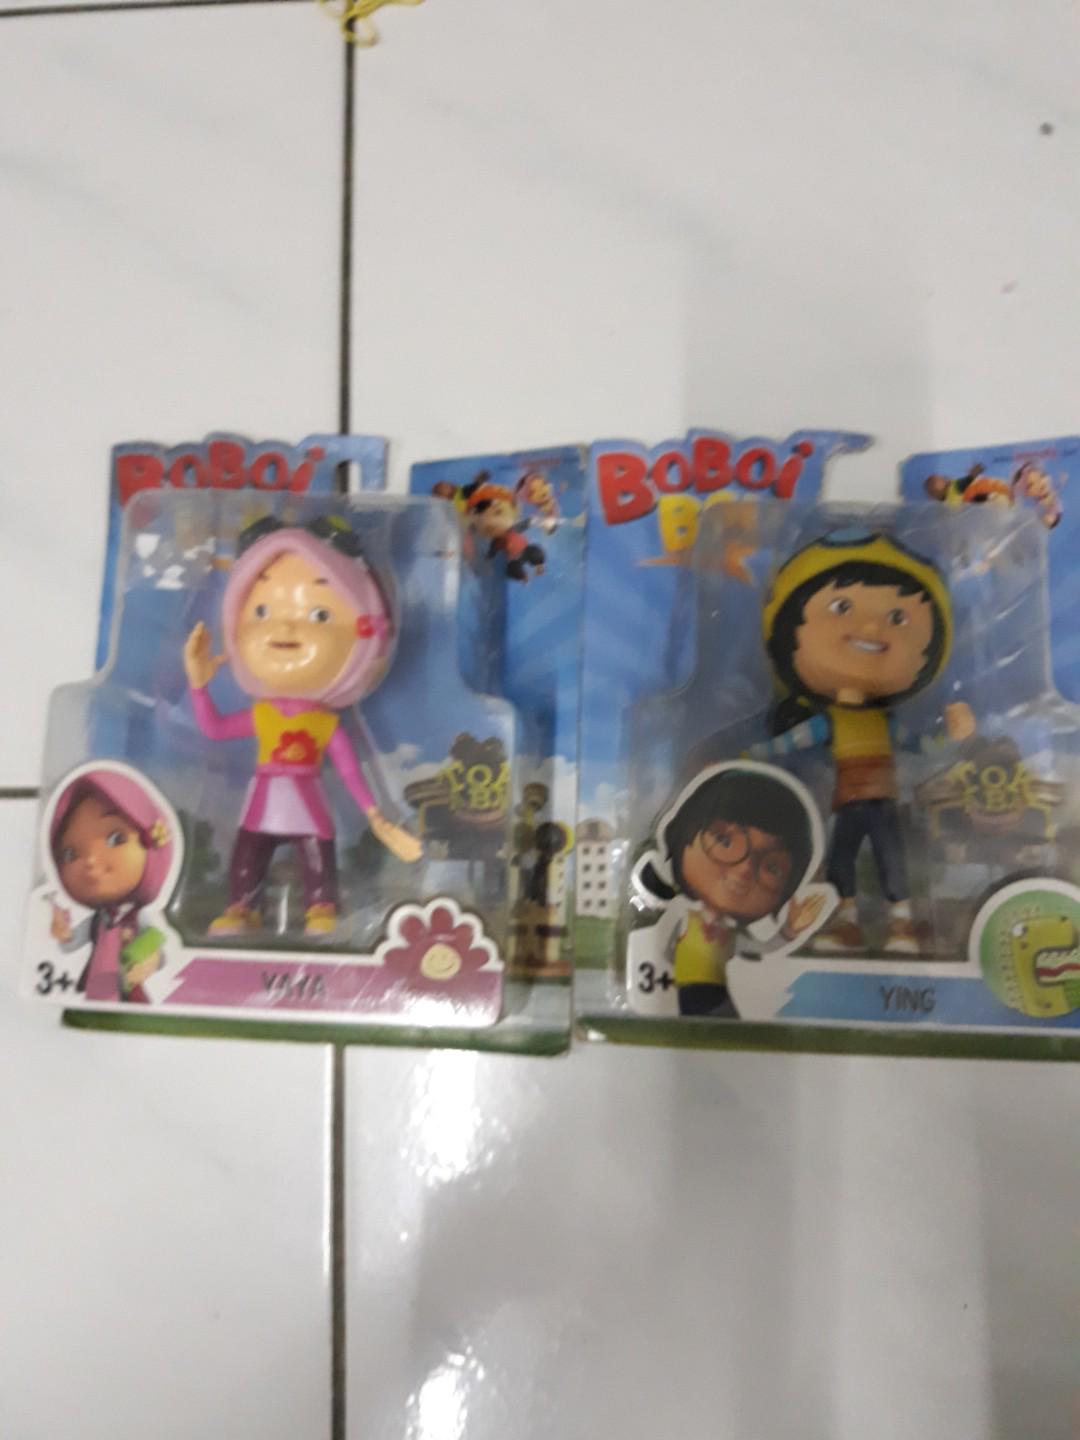 Boboiboy Ying & Yaya, Hobbies & Toys, Collectibles & Memorabilia ...